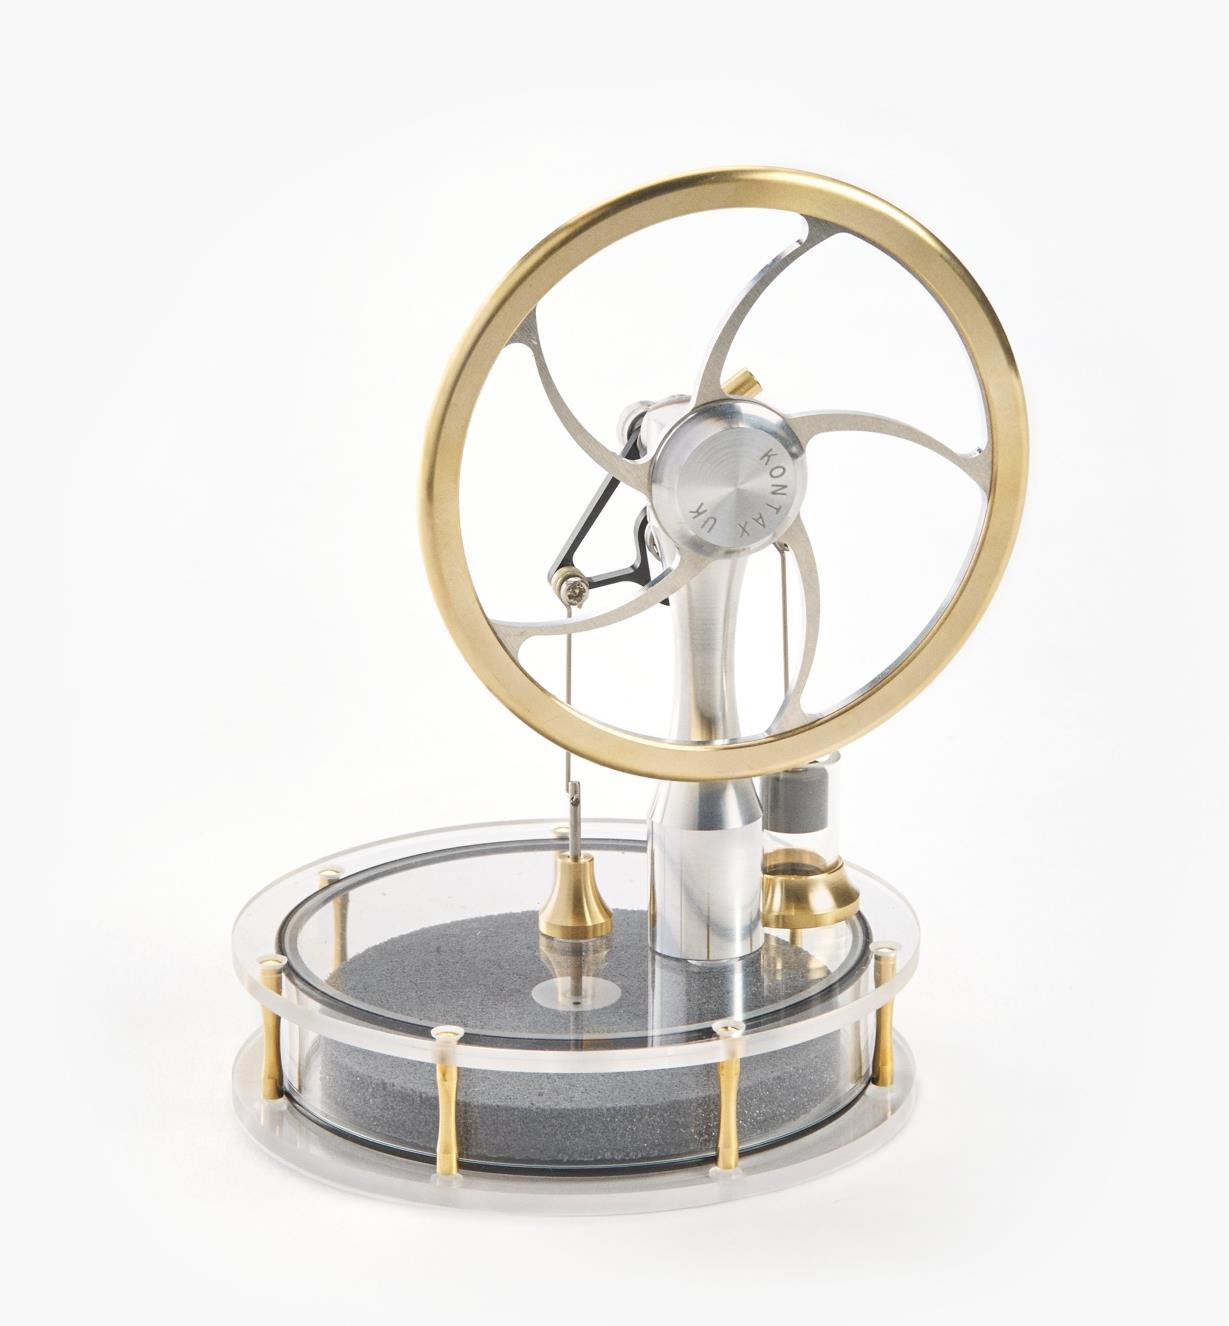 45K3990 - Low-Temperature Stirling Engine Kit